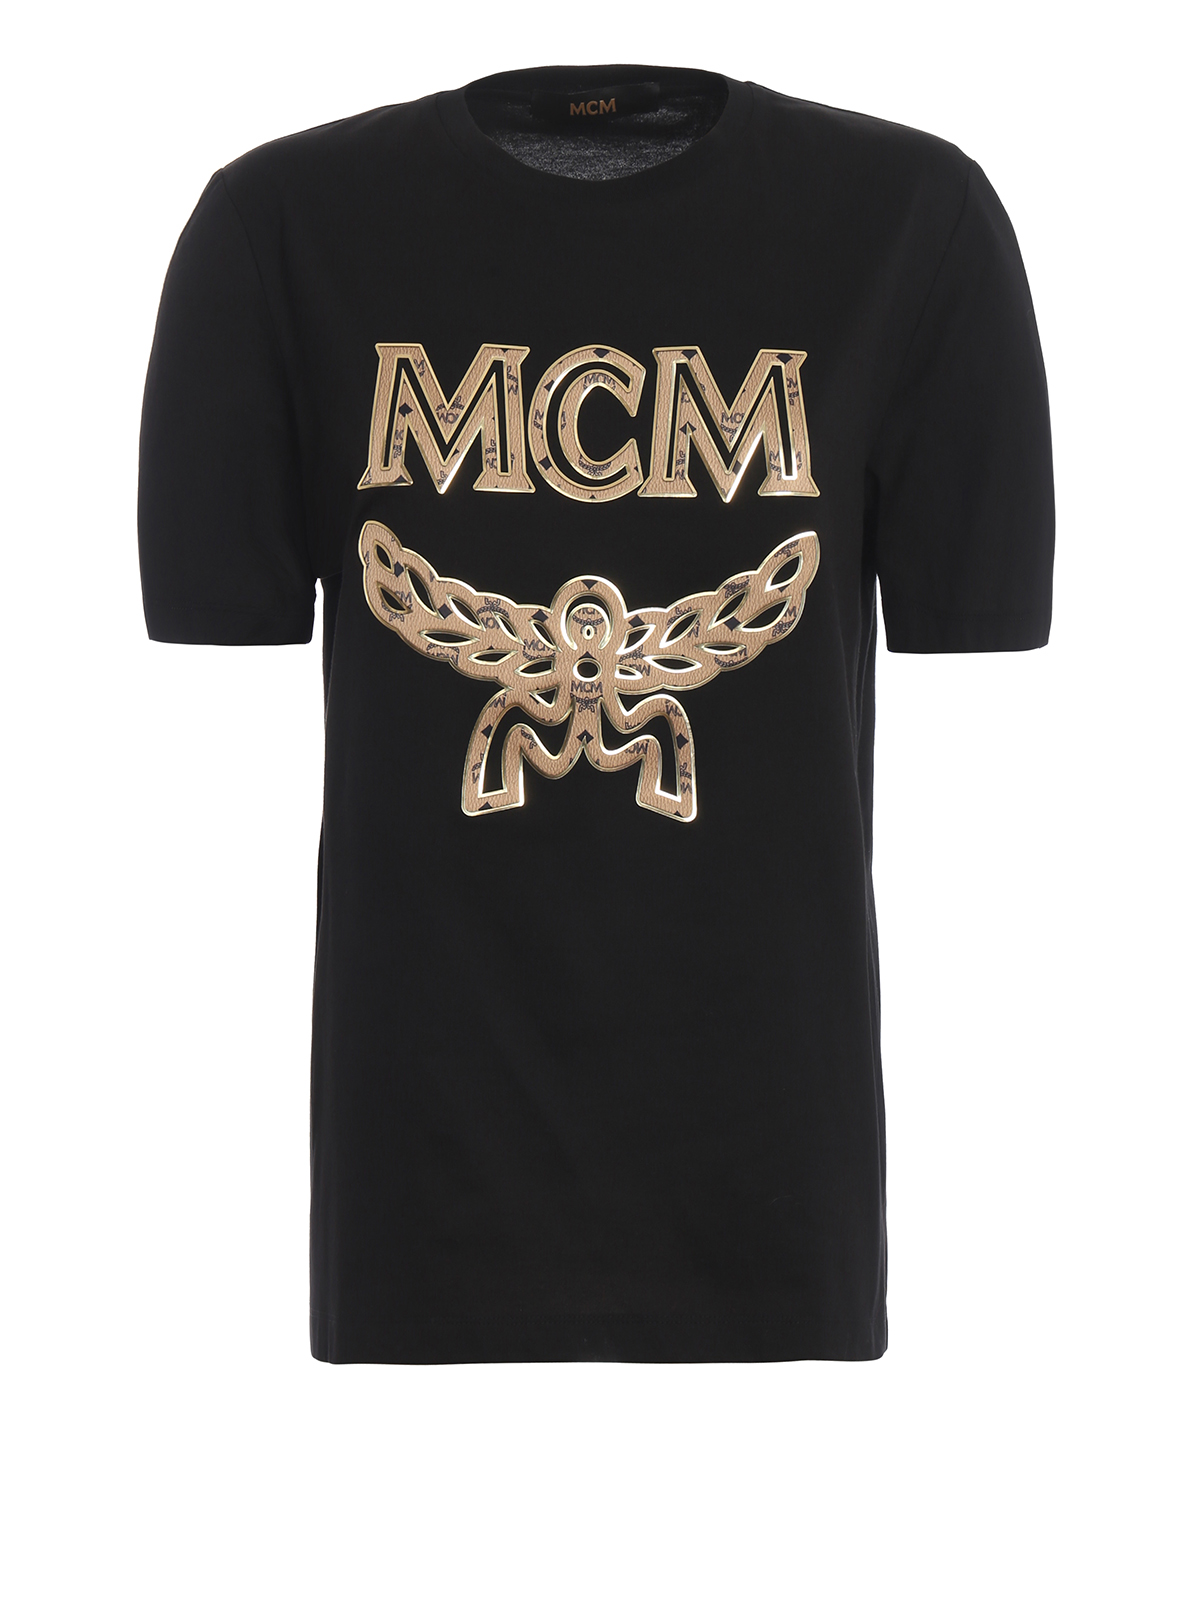 T-shirts Mcm - MCM print black T-shirt - MHT8SMM10BK001 | iKRIX.com